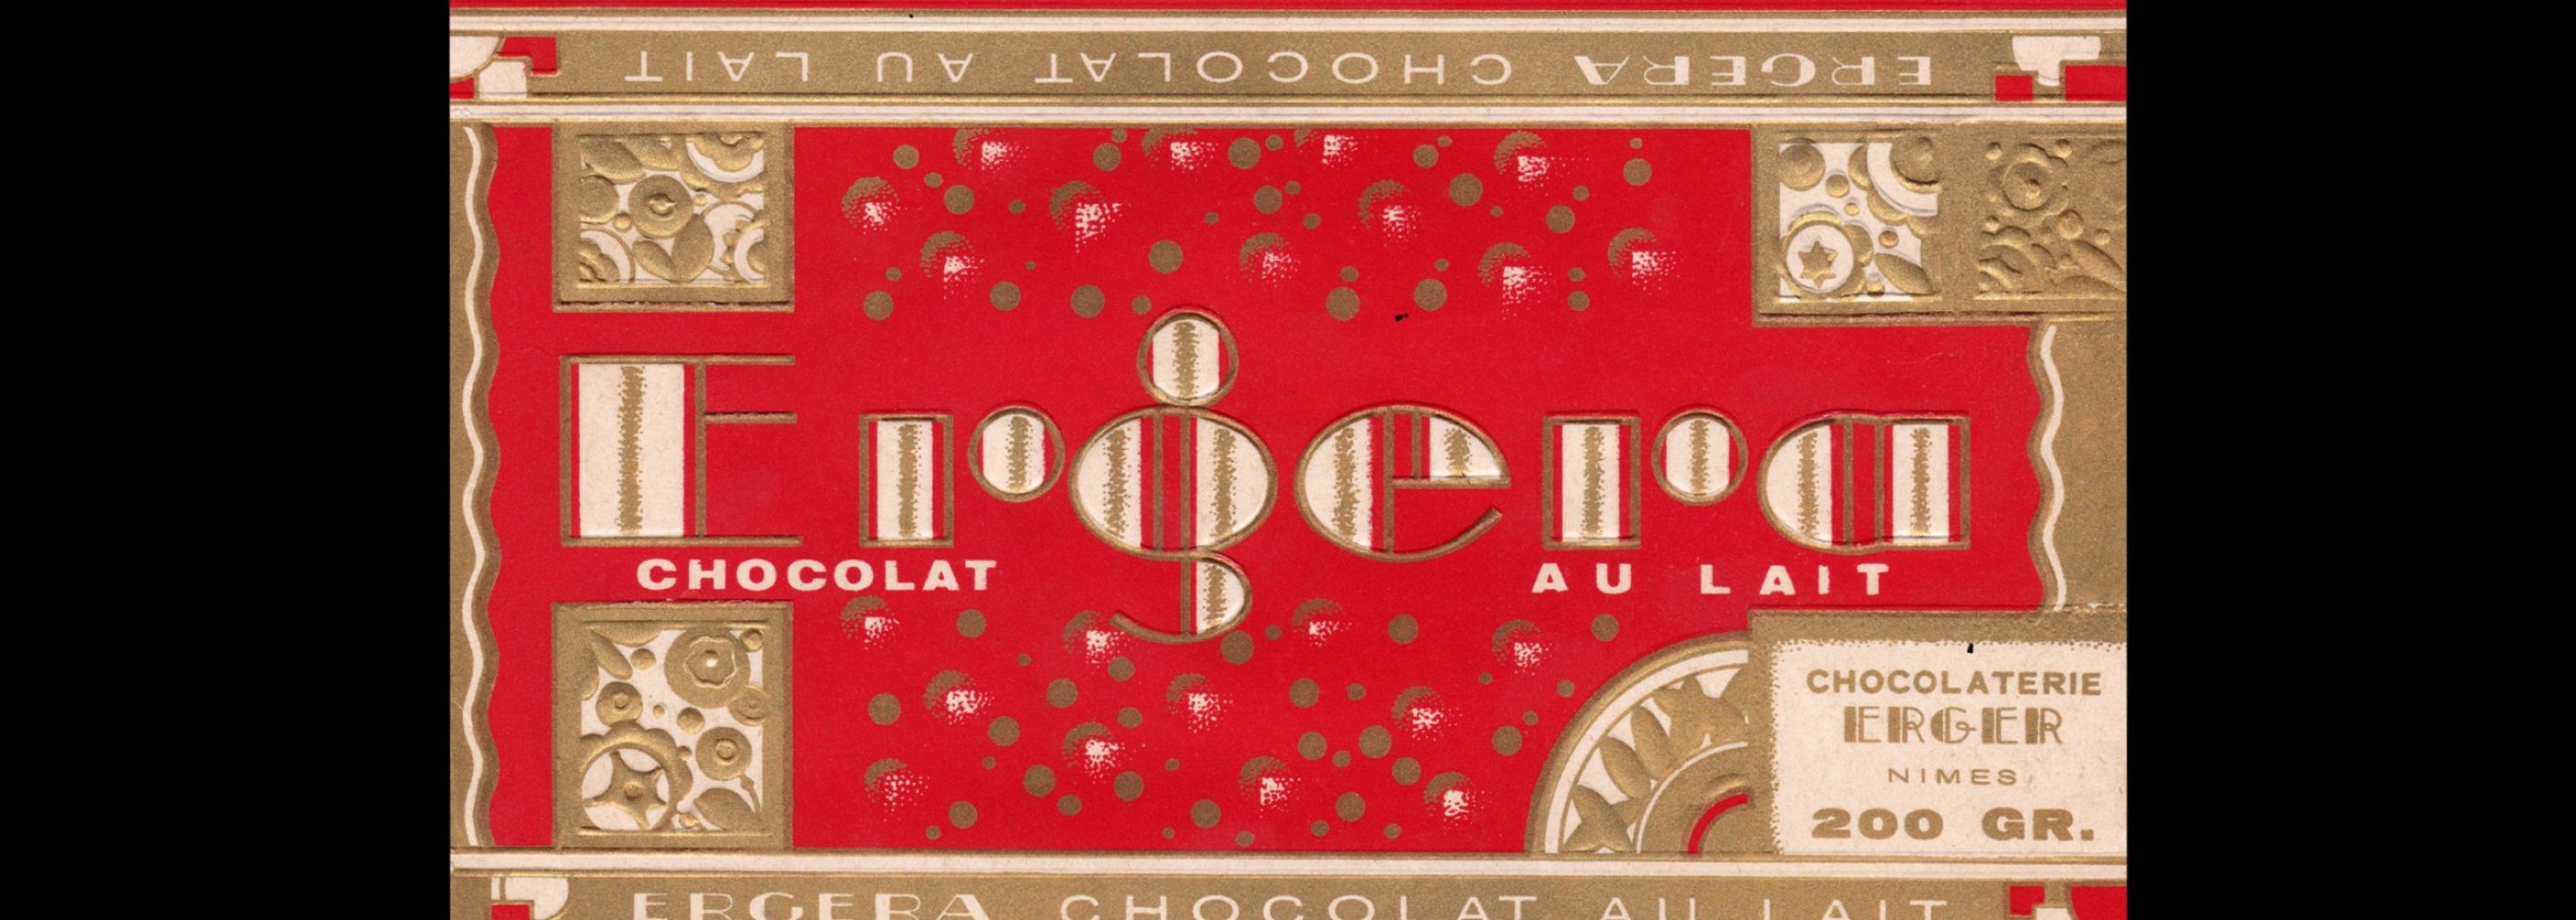 Ergera Chocolat Au Lait vintage chocolate label